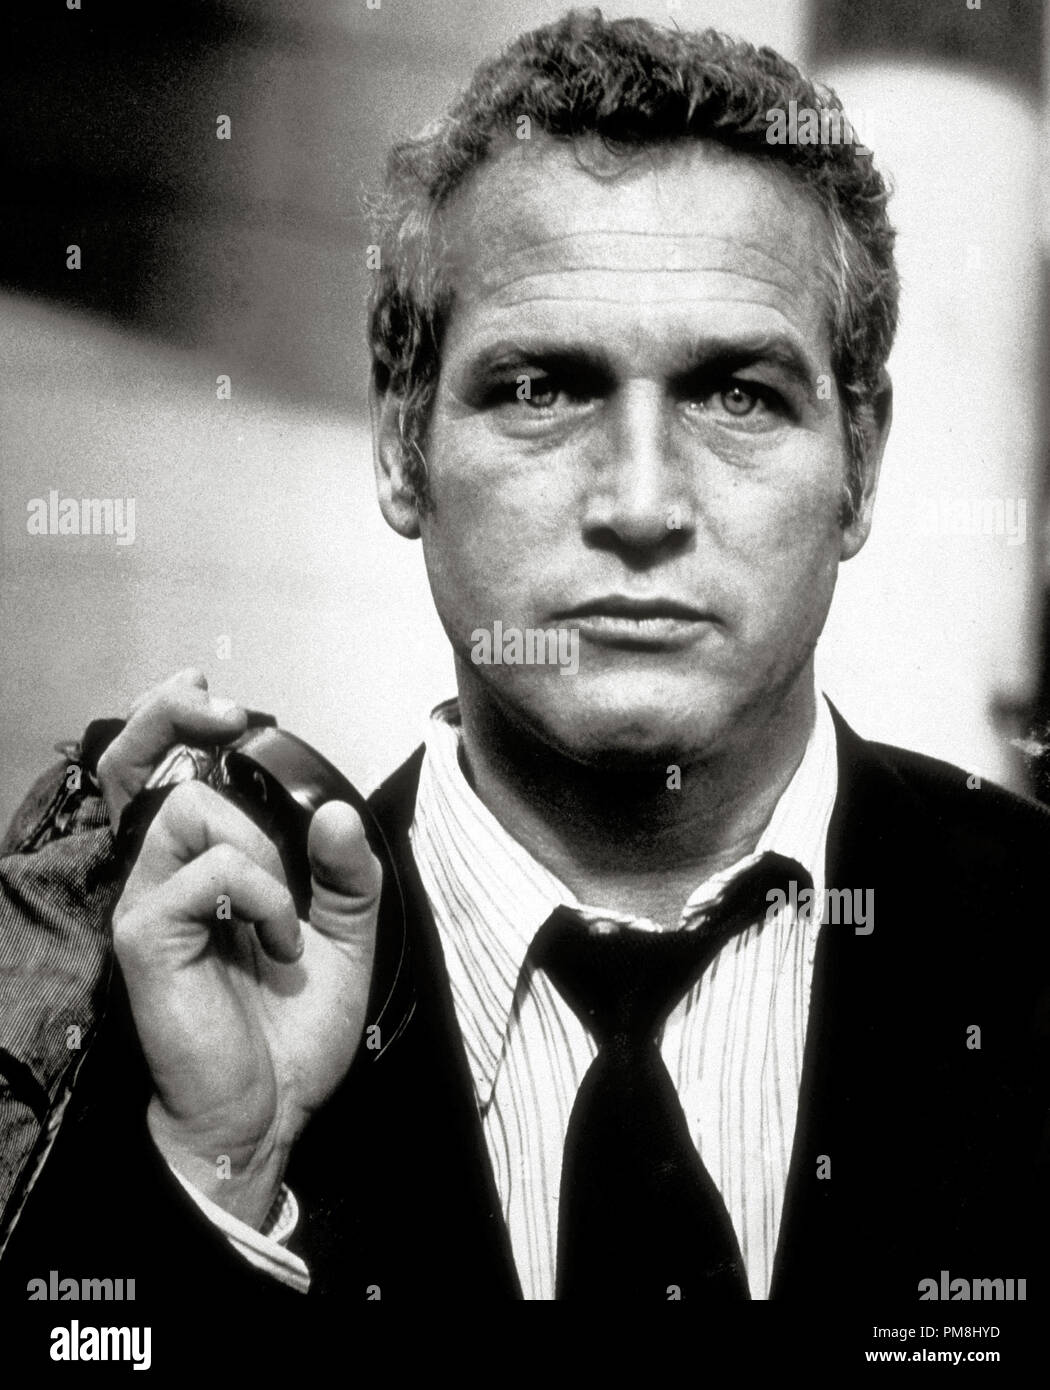 (Archivierung klassische Kino - Paul Newman Retrospektive) Paul Newman, "Wusa" 1970 Paramount Datei Referenz # 31510 058 THA Stockfoto